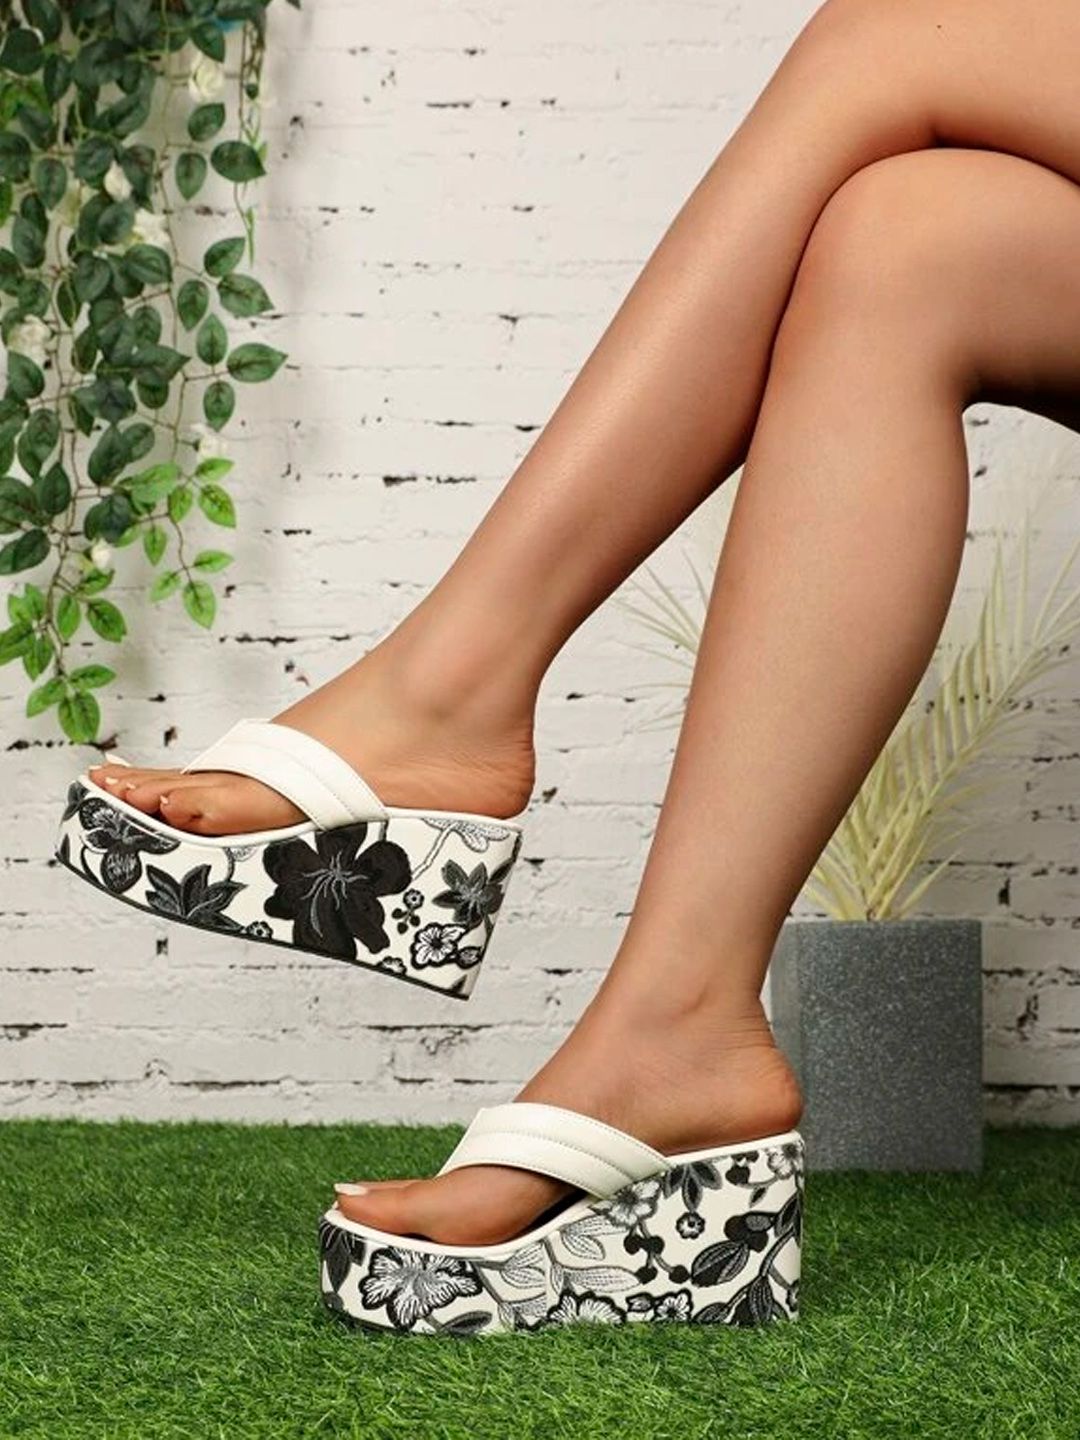     			Shoetopia - White Women's Slip On Heels